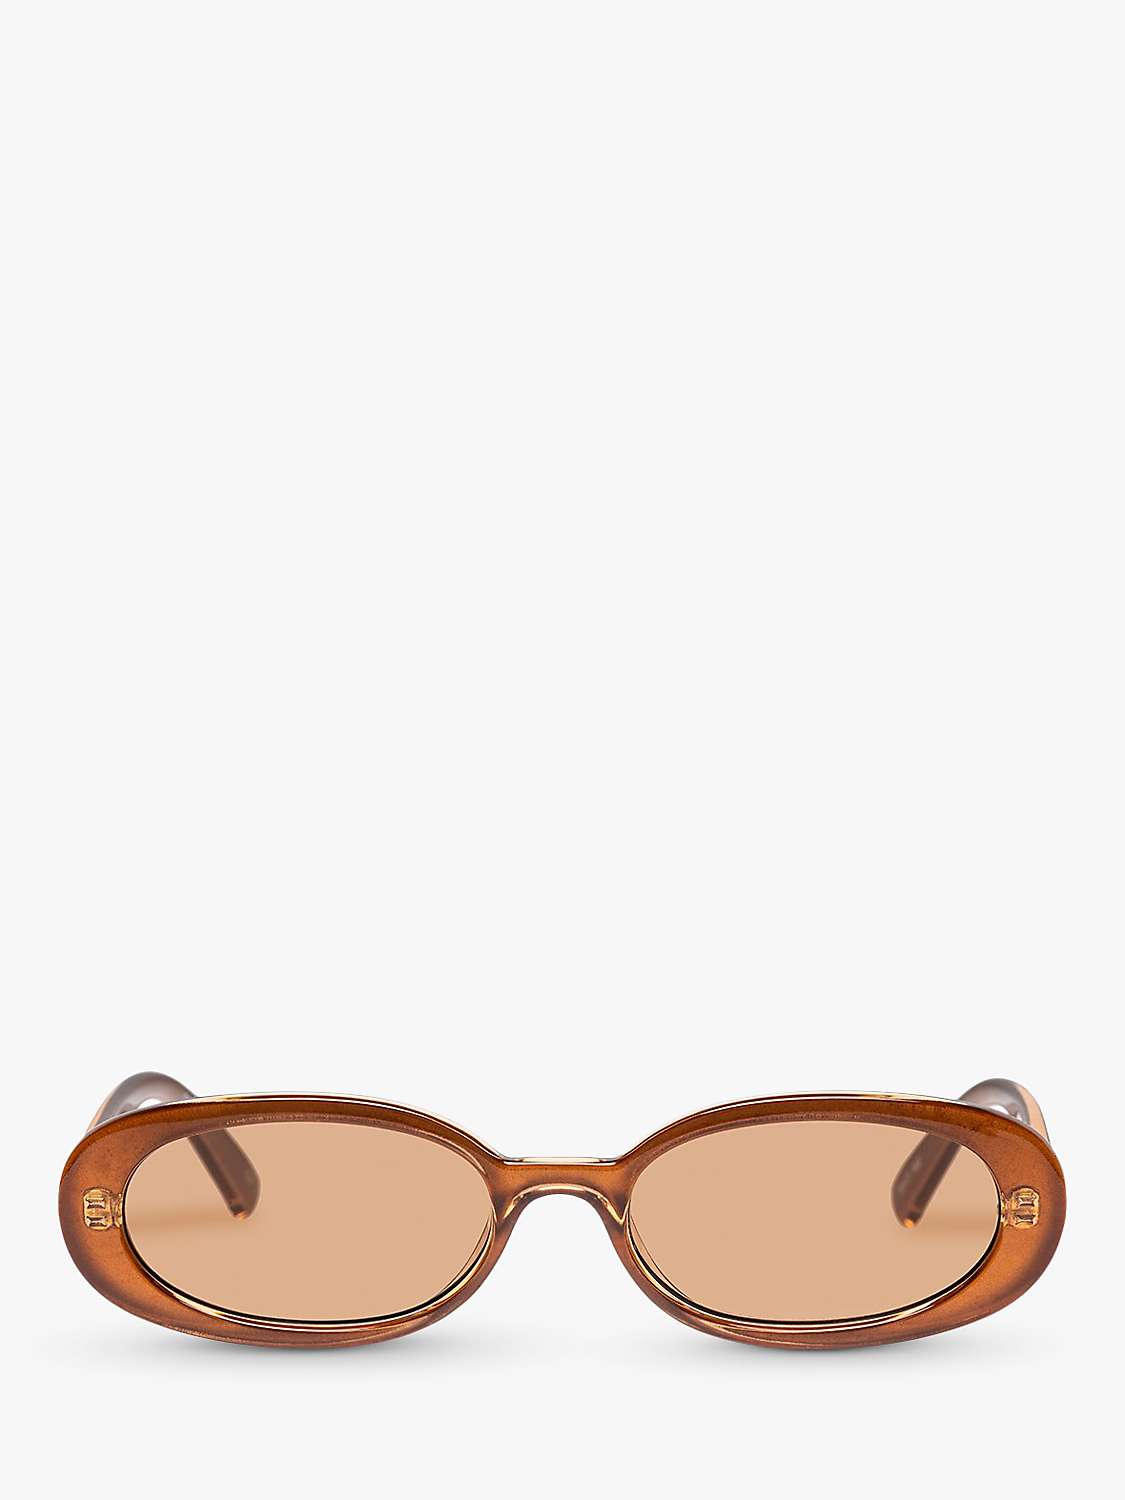 Buy Le Specs L5000177 Women's Outta Love Oval Sunglasses, Tan/Beige Online at johnlewis.com